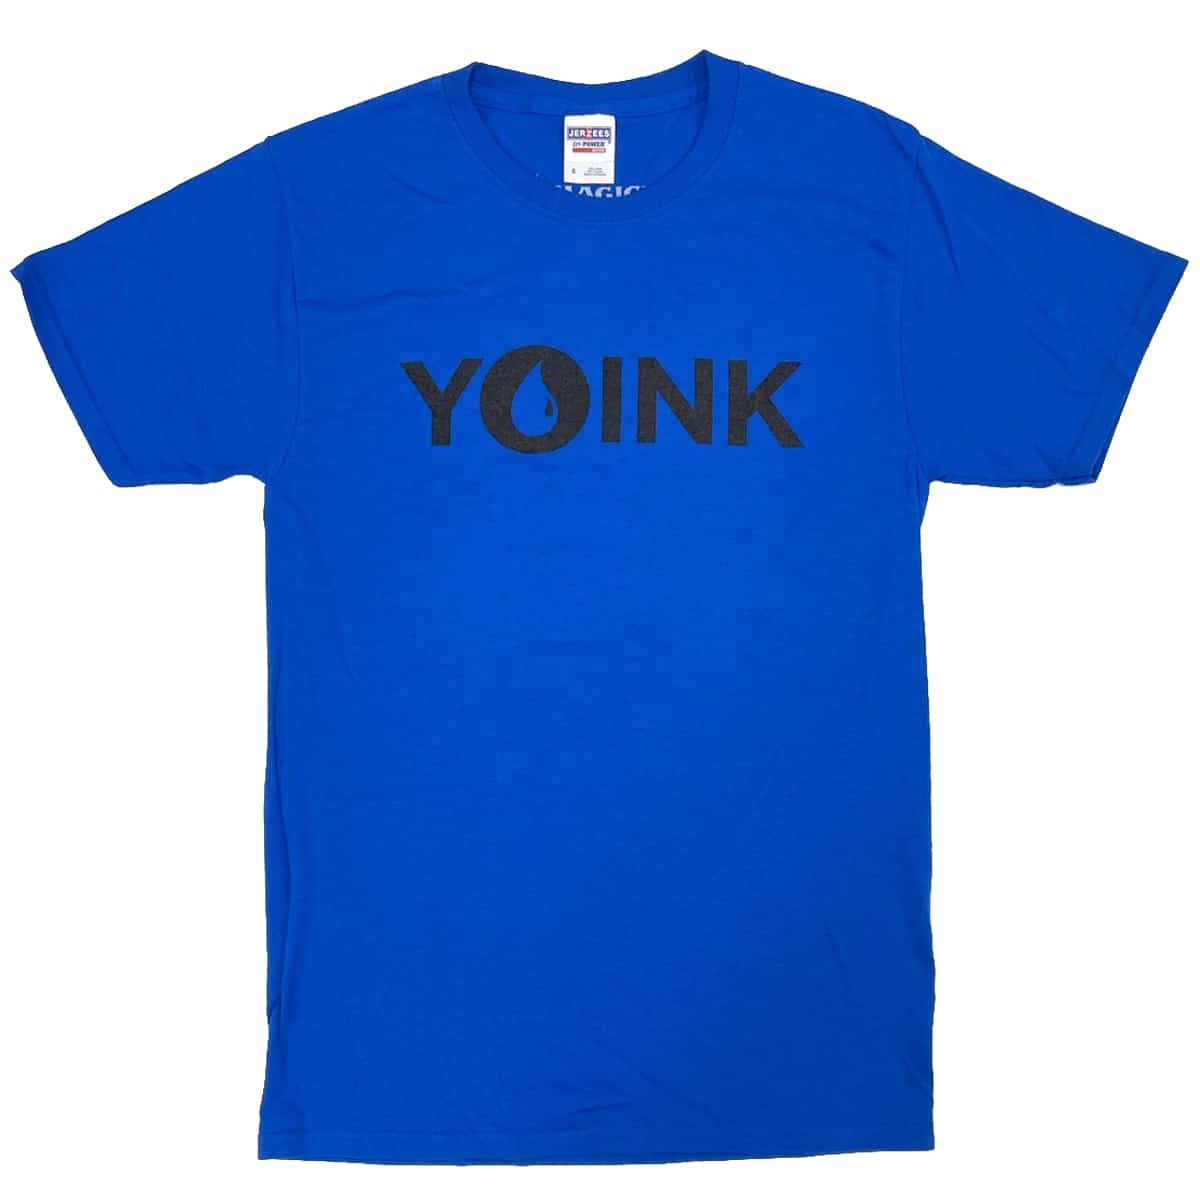 Magic: The Gathering Mana Word V2 "YOINK" T-Shirt